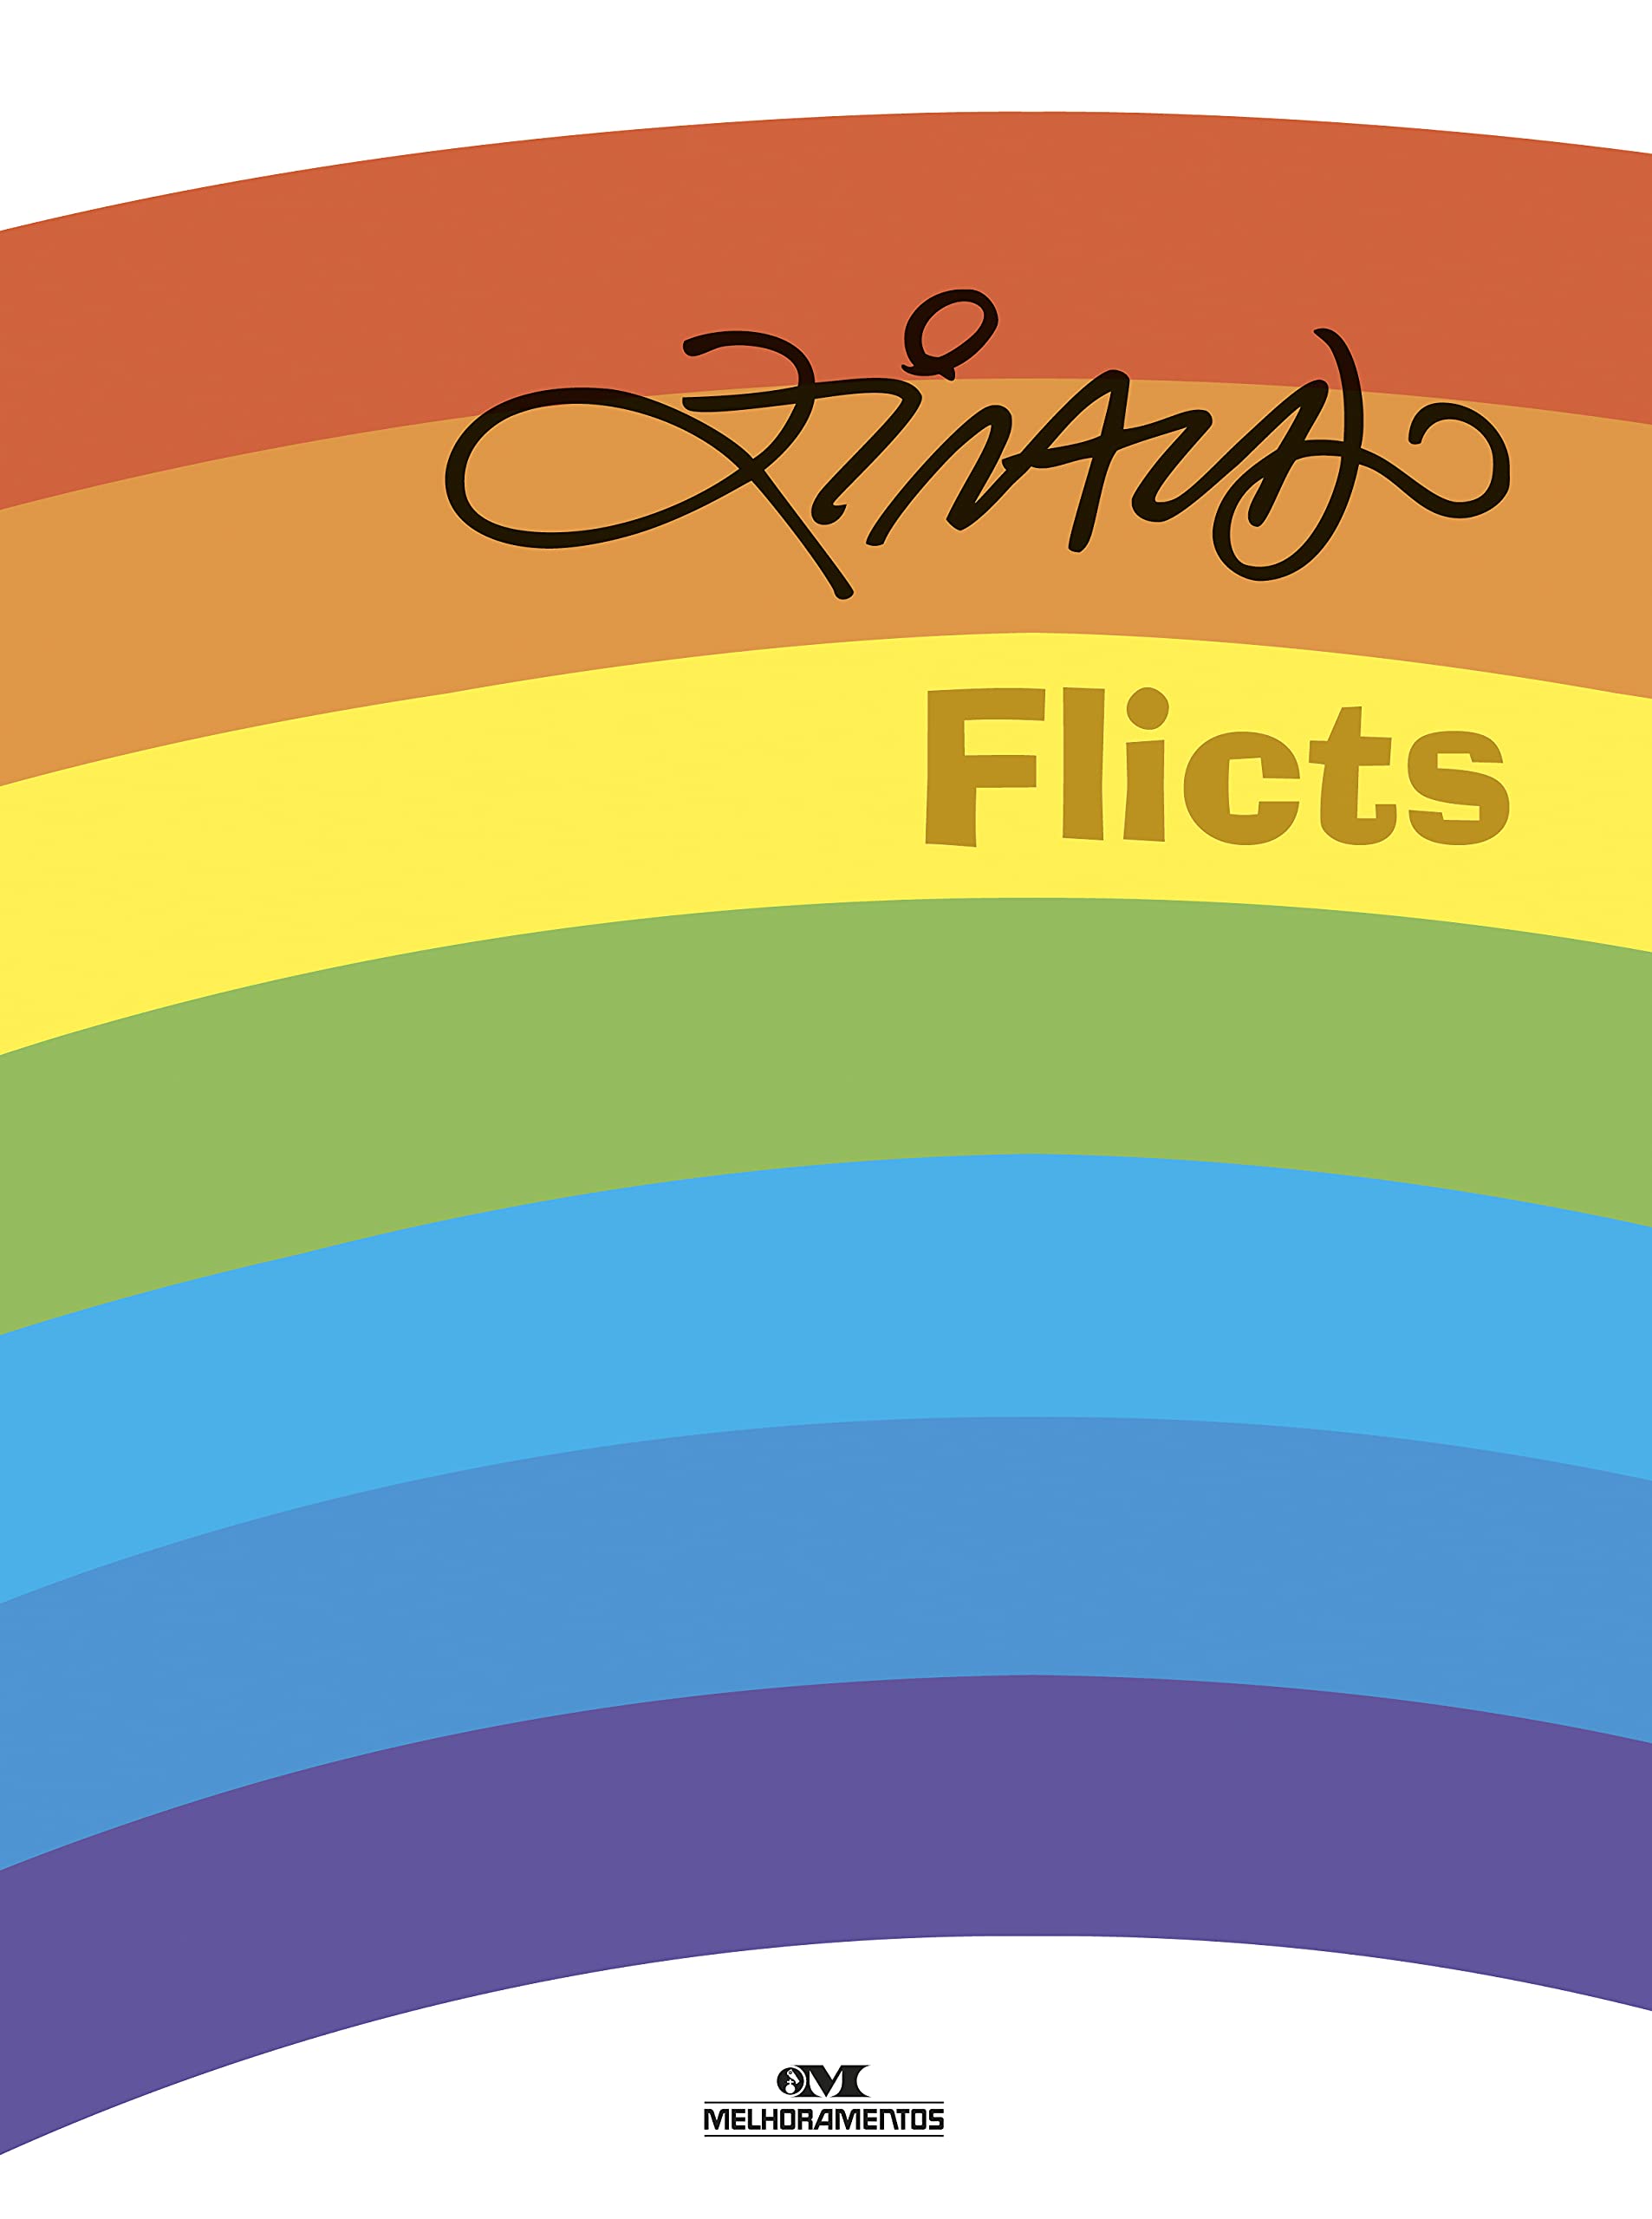 Capa do livro "Flicts", de Ziraldo. A capa mostra um arco-íris, a assinatura de Ziraldo e o título "Flicts".